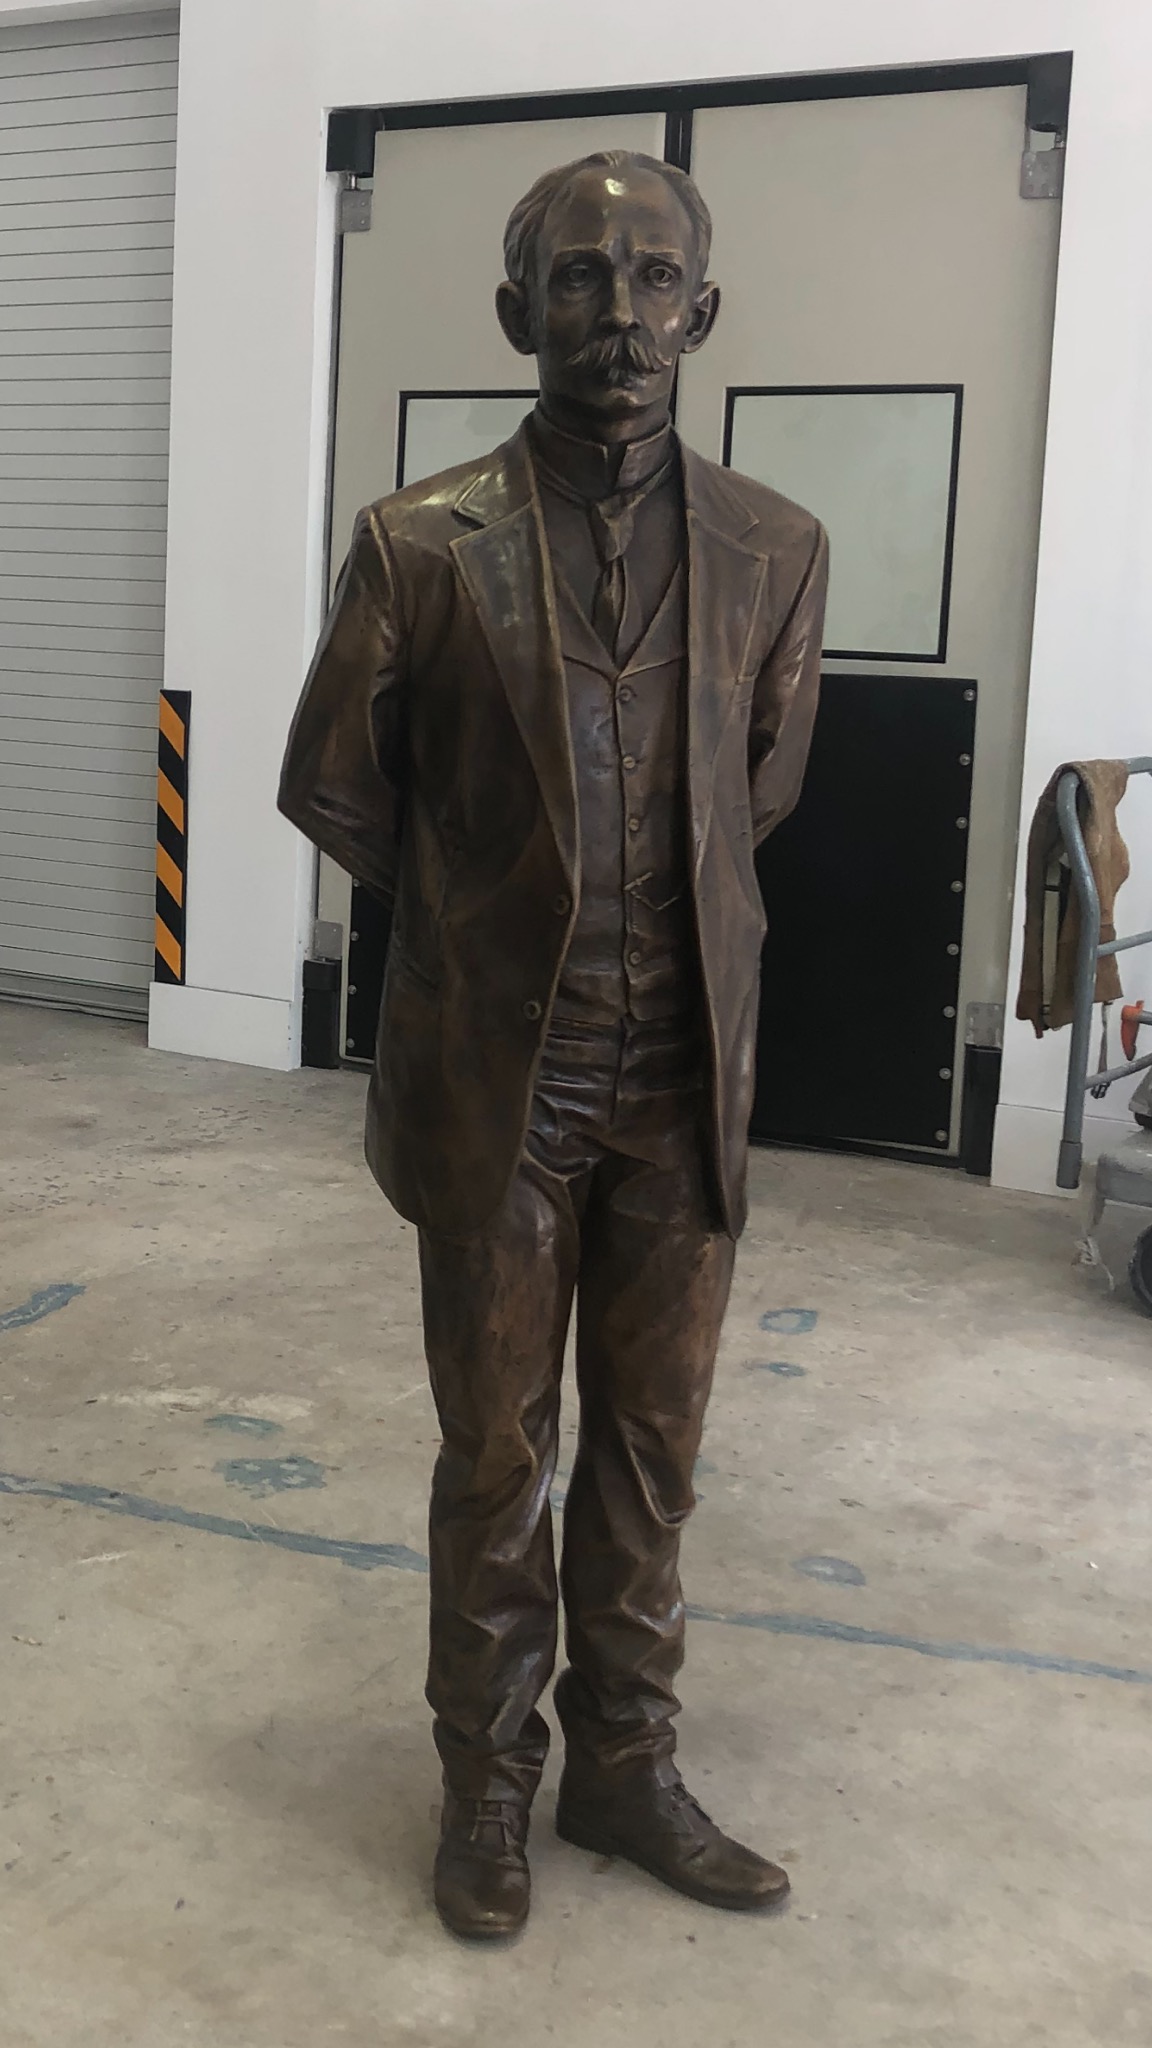 Jose Marti by Jose Villa, Bronze sculpture, Life size, 2019, Washington, D.C